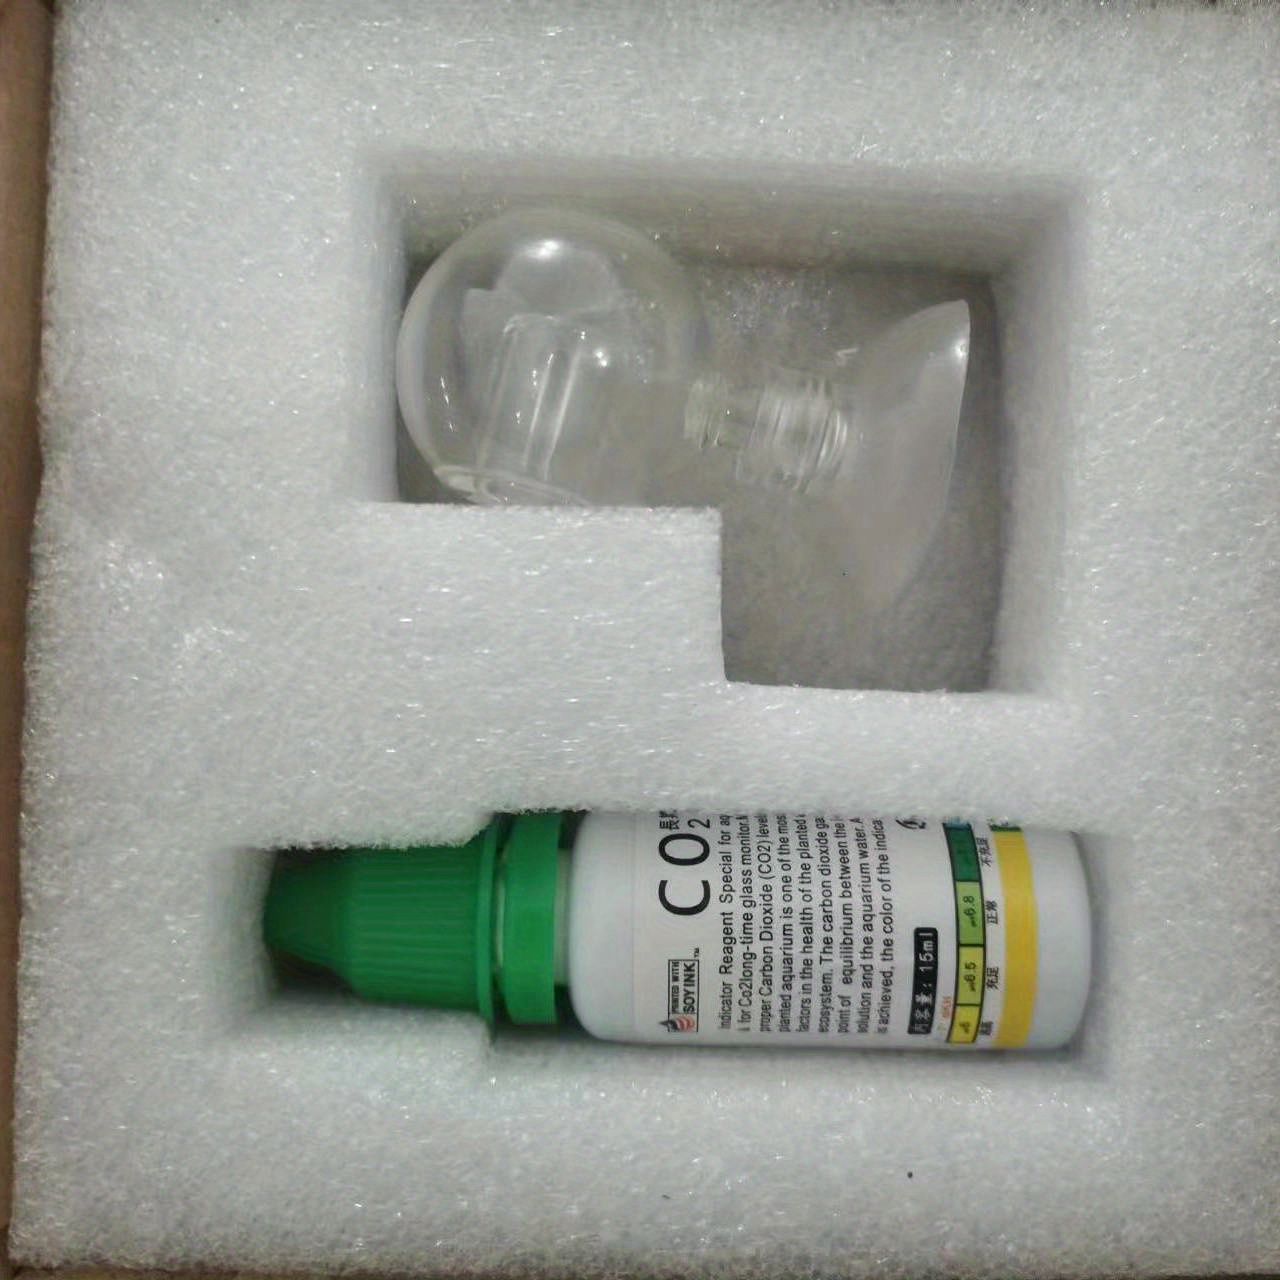 Aquarium CO2 Glass Drop Checker 15ml Test Liquid Co2 Indicator